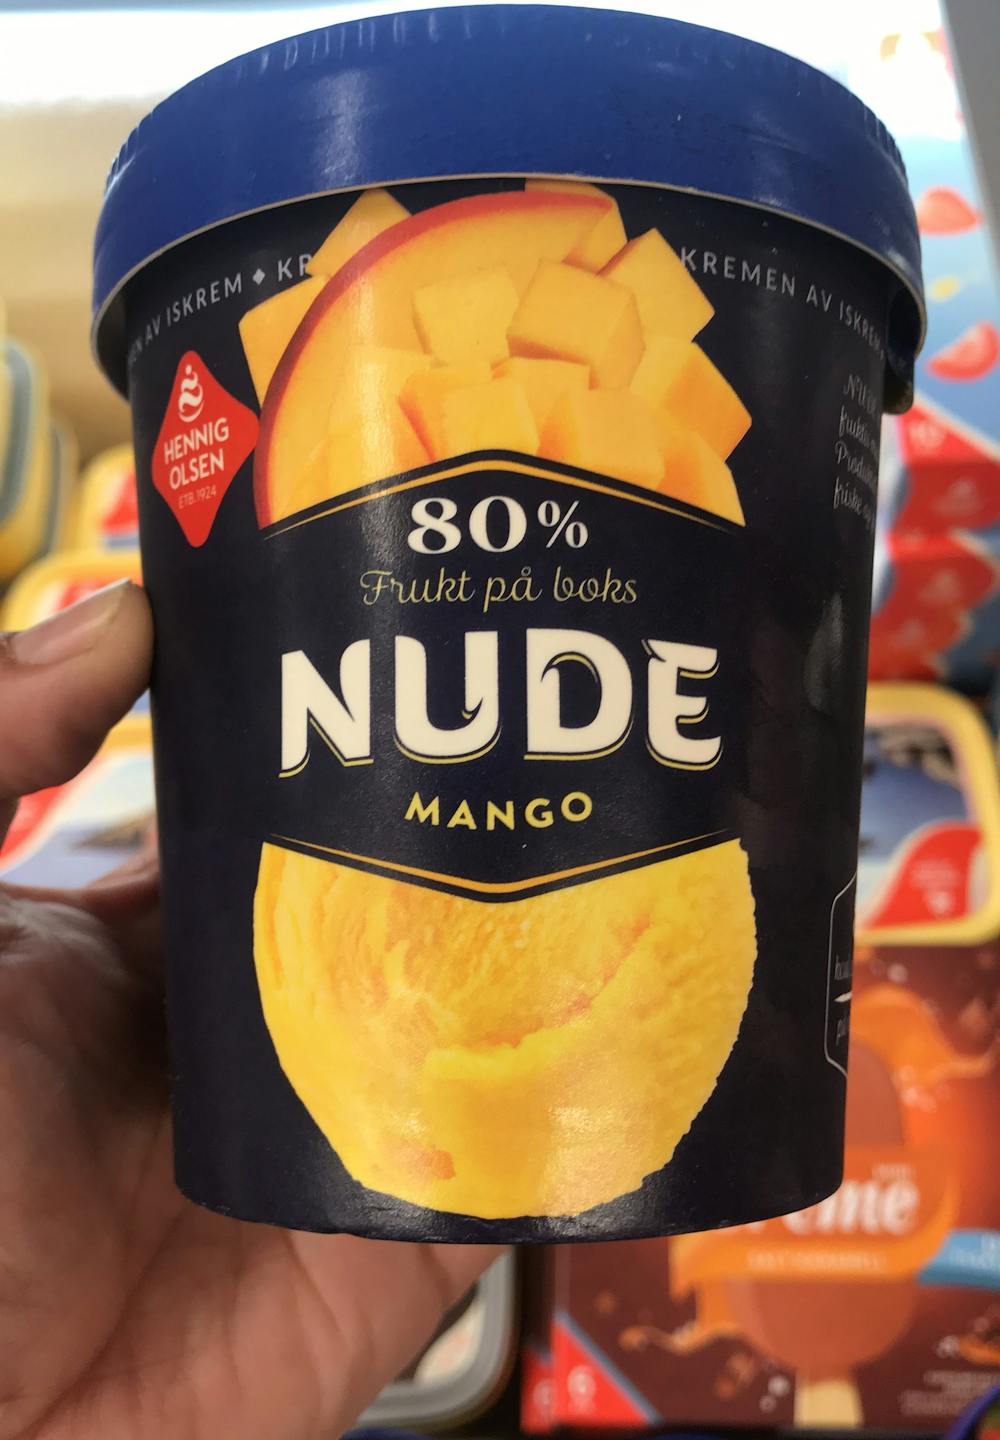 Nude mango, Hennig Olsen